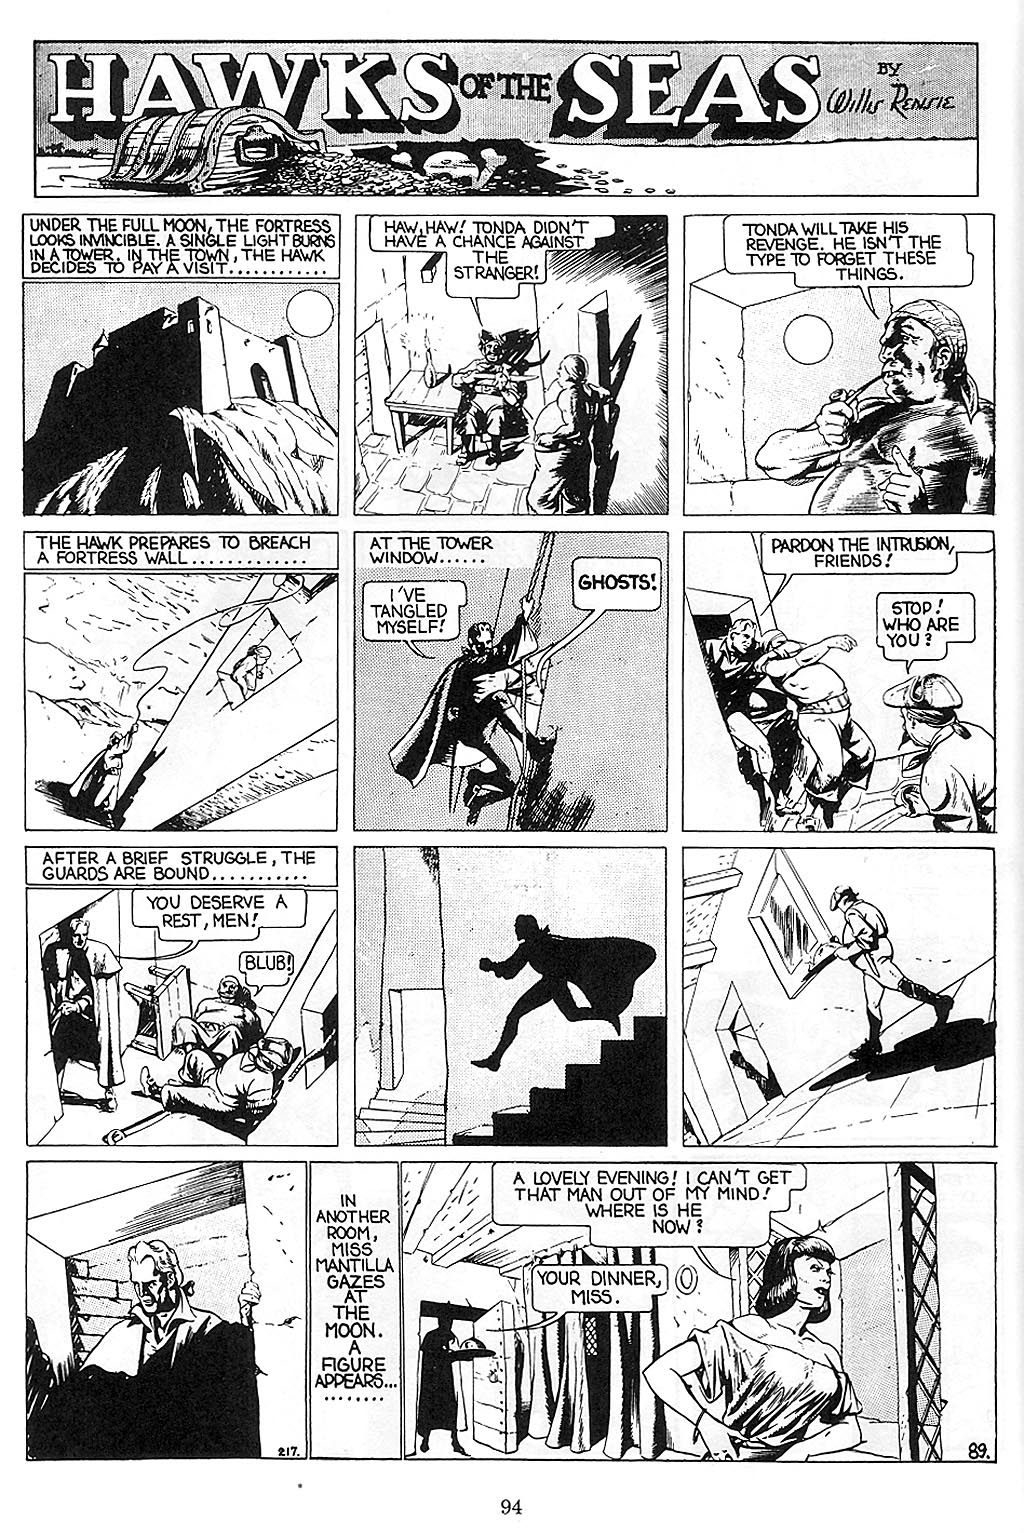 Read online Will Eisner's Hawks of the Seas comic -  Issue # TPB - 95